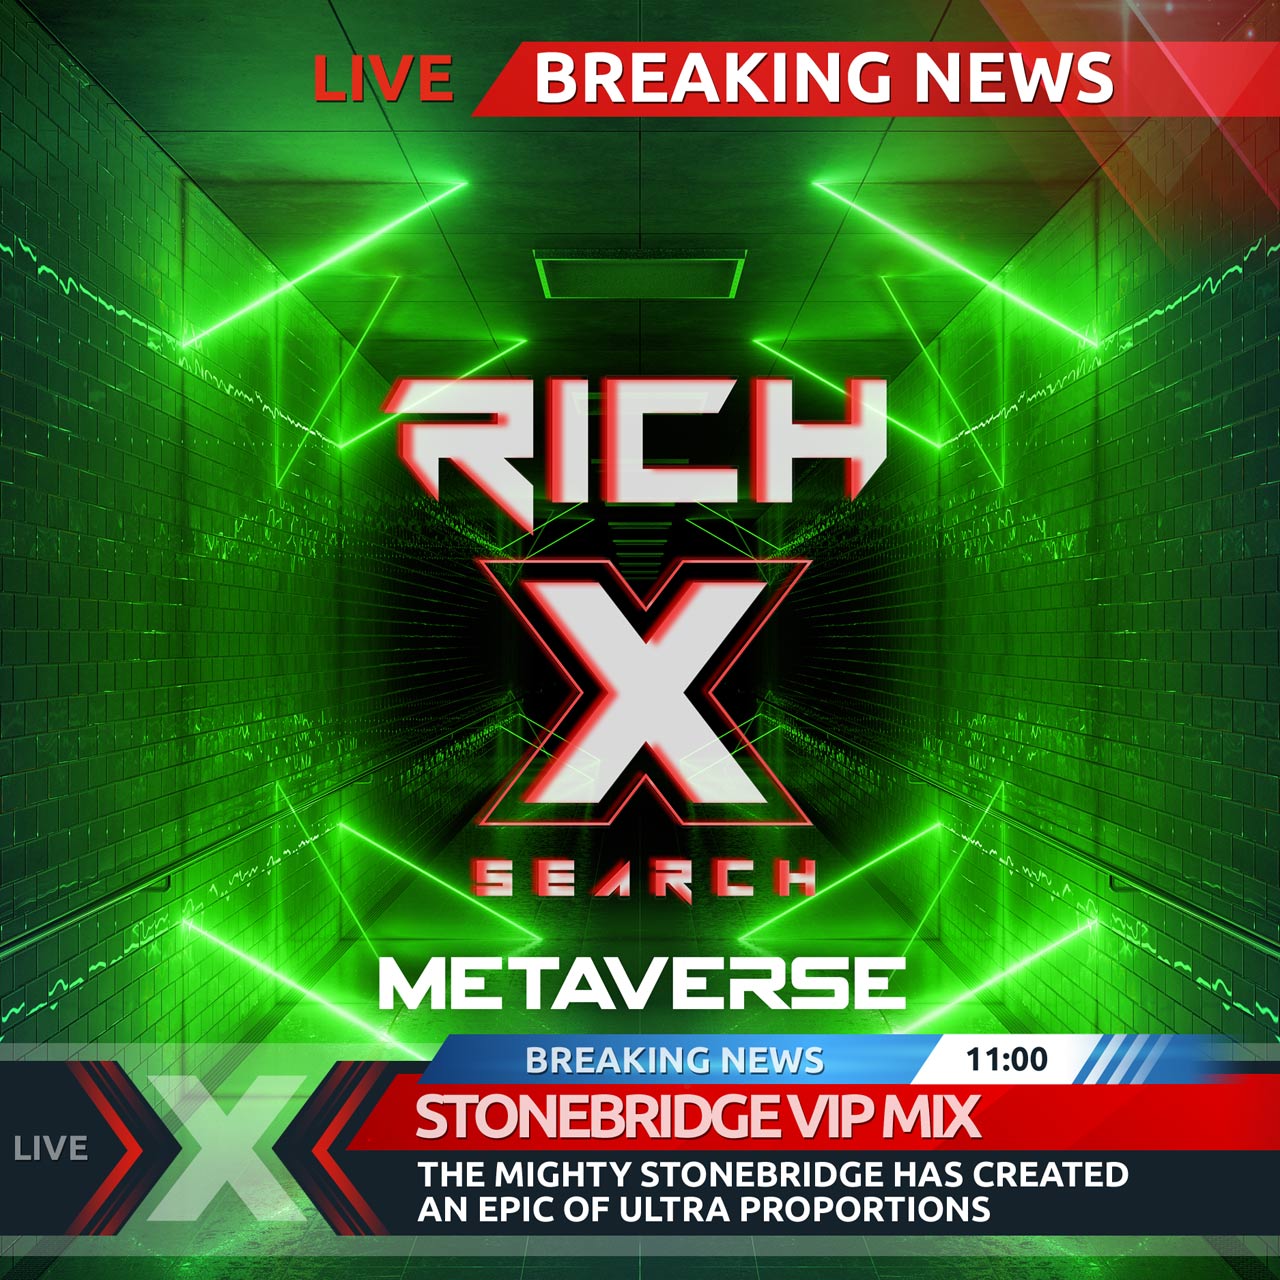 Rich X Search – Metaverse (StoneBridge VIP Mix)